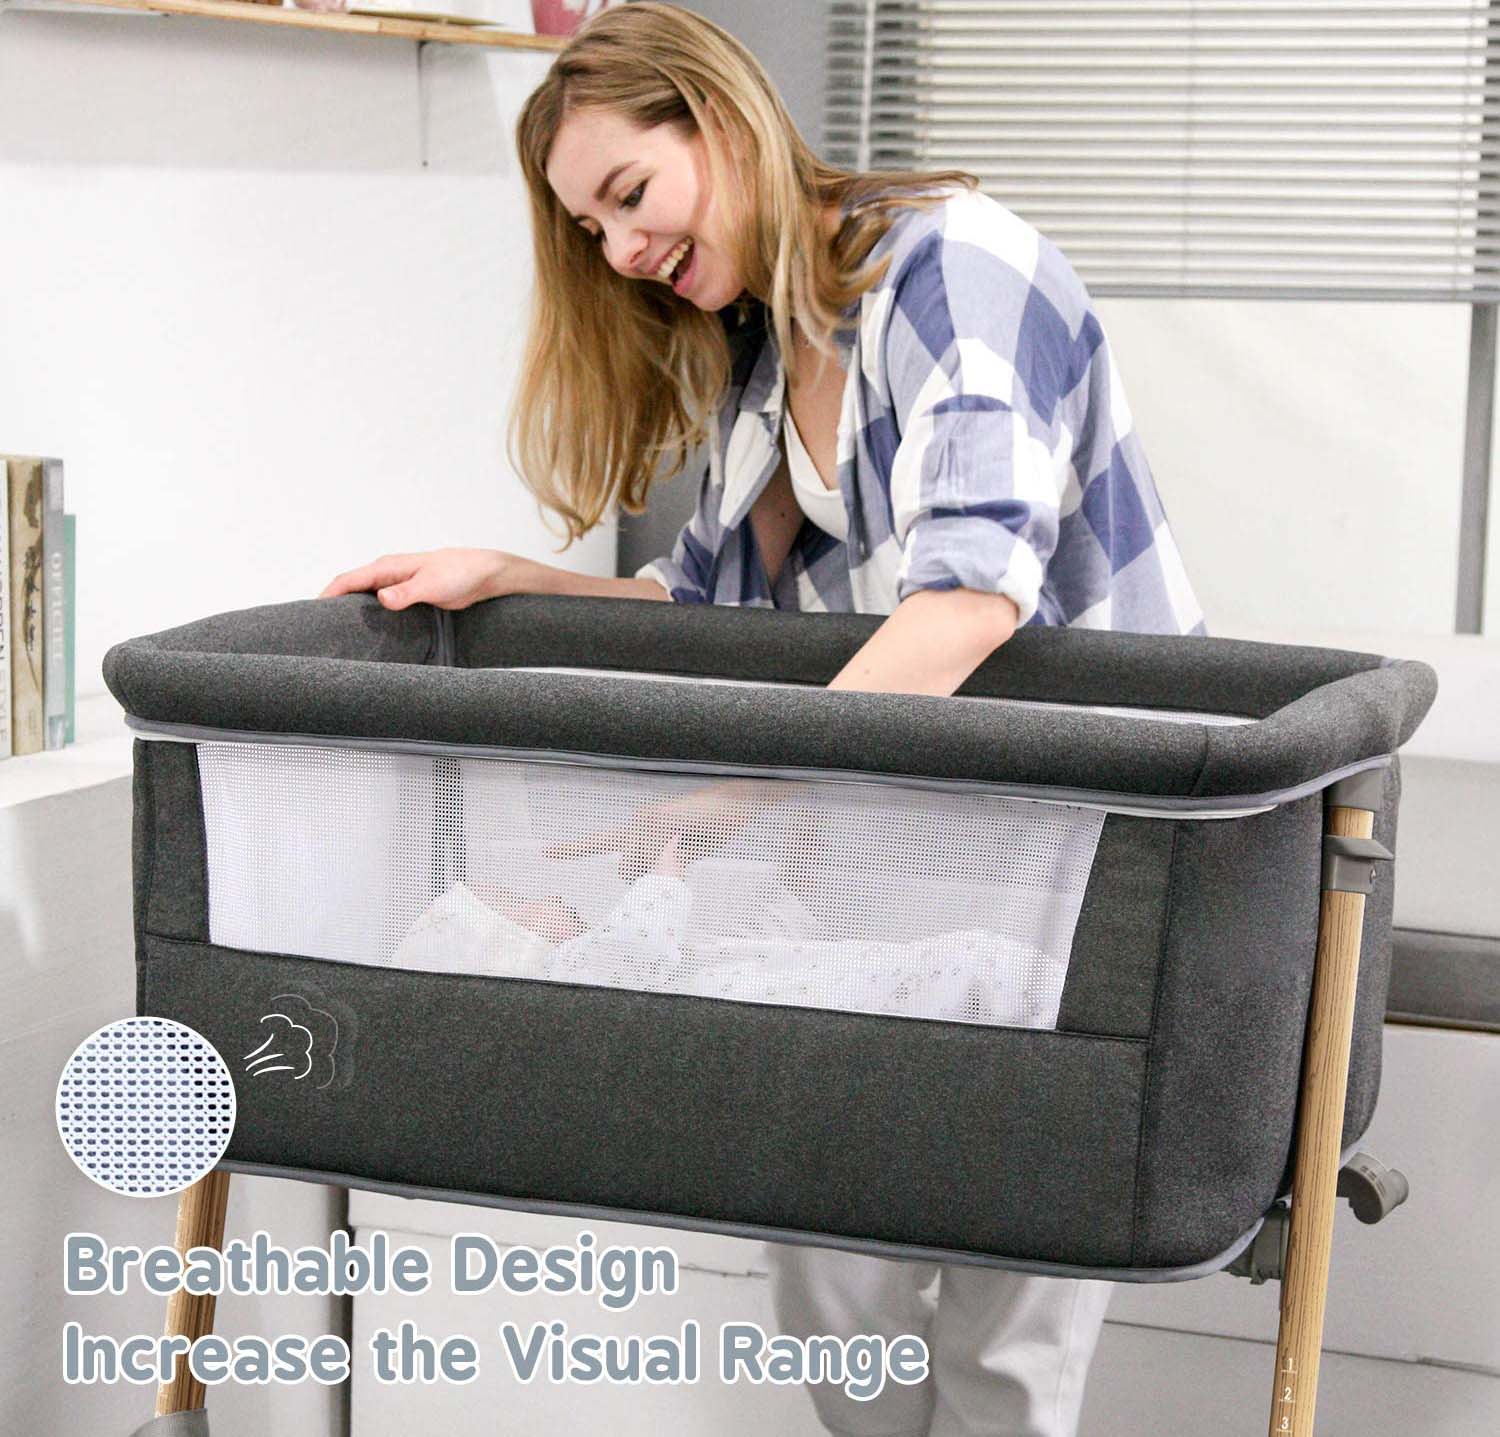 Bedside Baby Crib,  Height Adjustable Detachable Side Baby Bassinet Sleeper Bed,Co-Sleeping Baby Cot for Infant/Newborn acplaypen.com